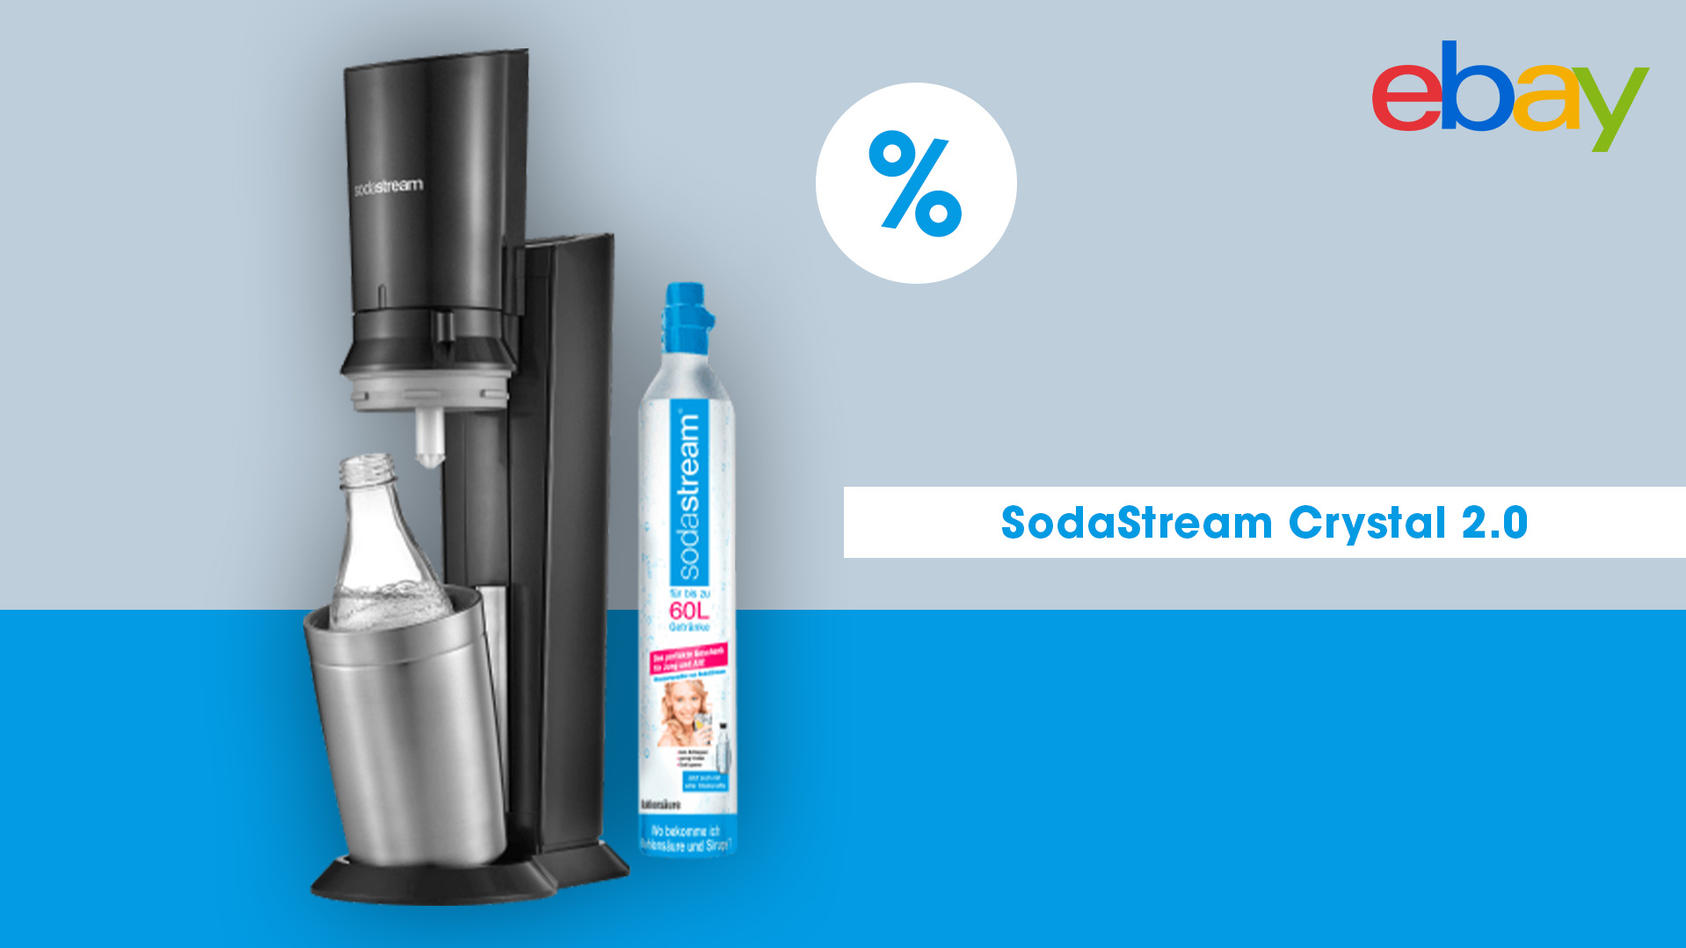 SodaStream Crystal 2.0 auf eBay am Cyber Monday im Angebot